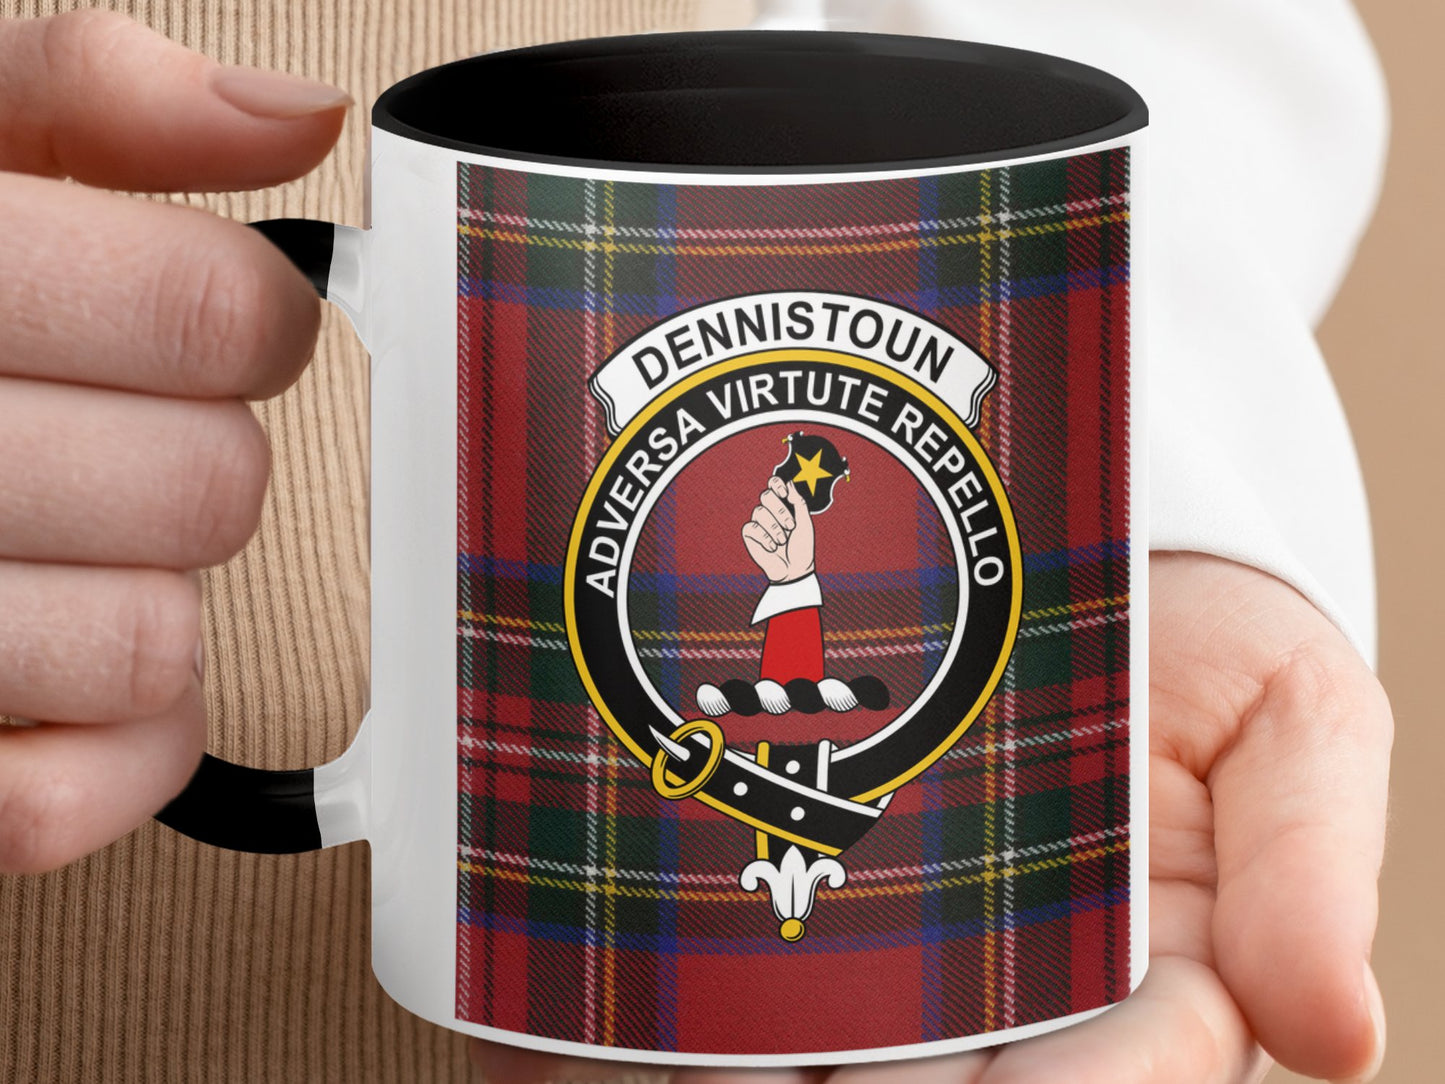 Clan Dennistoun Scottish Tartan Crest Design Mug - Living Stone Gifts